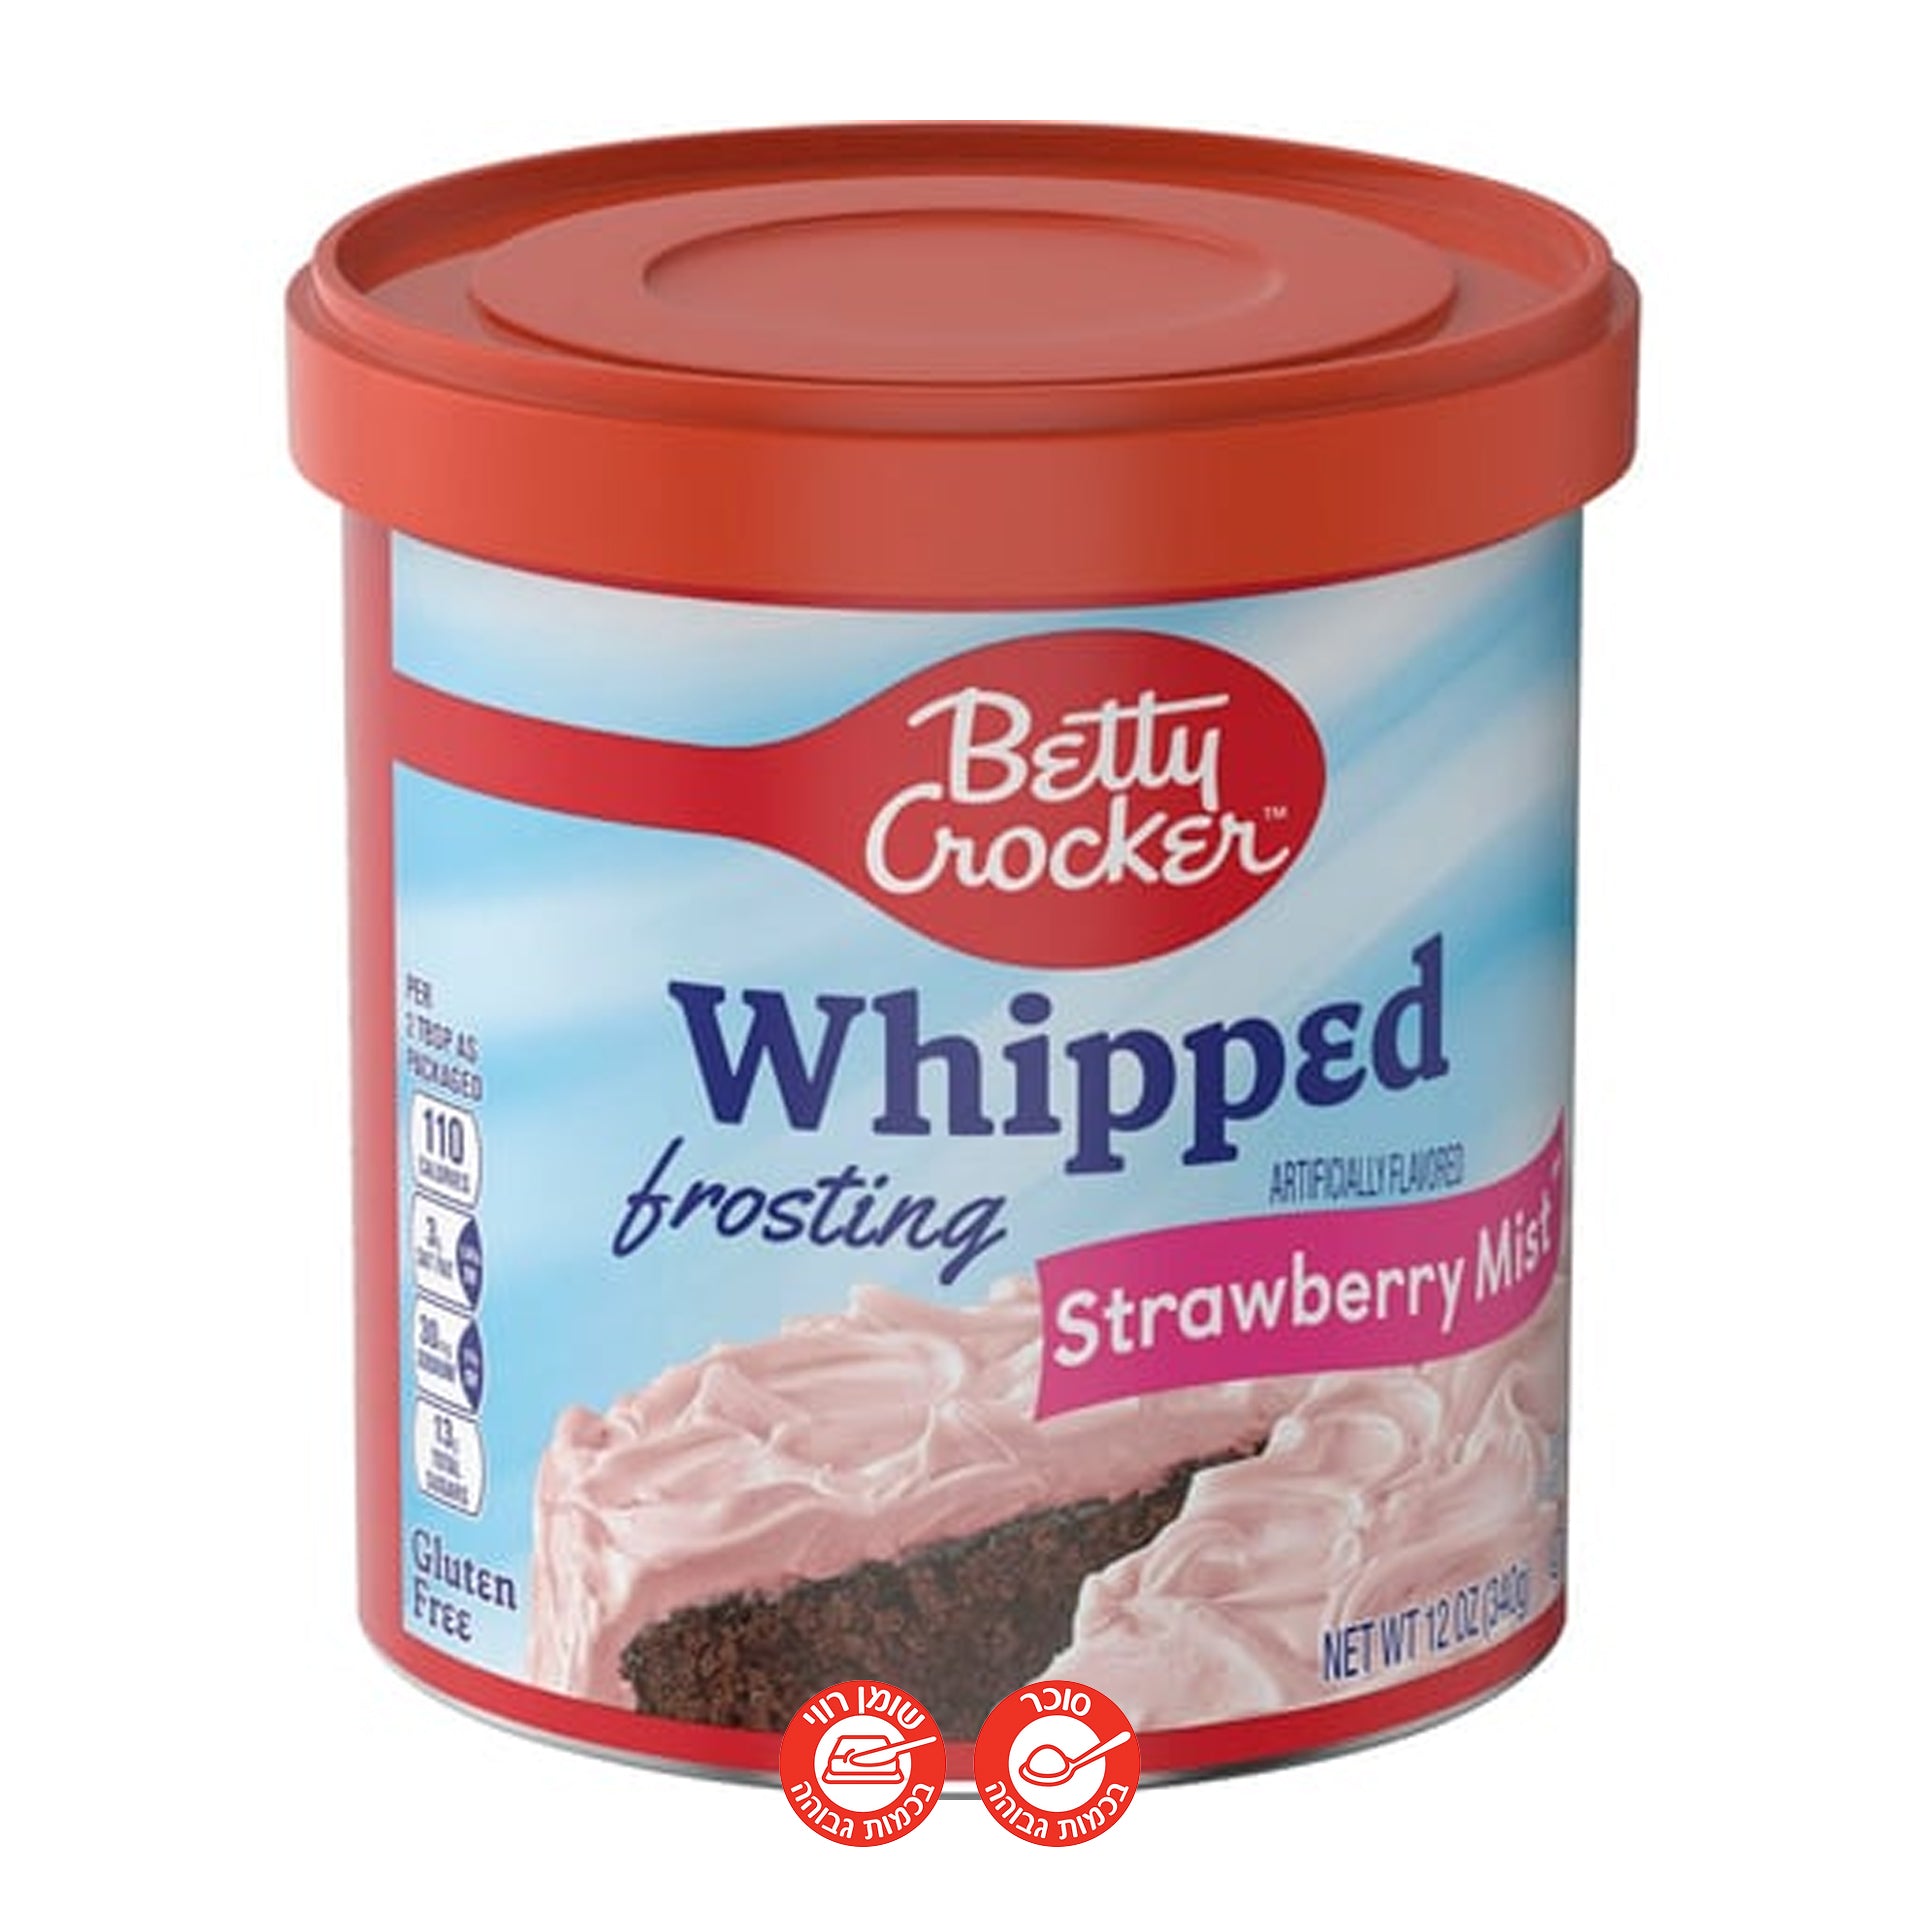 Betty Crocker Whipped Frosting Strawberry בטי קרוקר ציפוי לעוגה בטעם תות